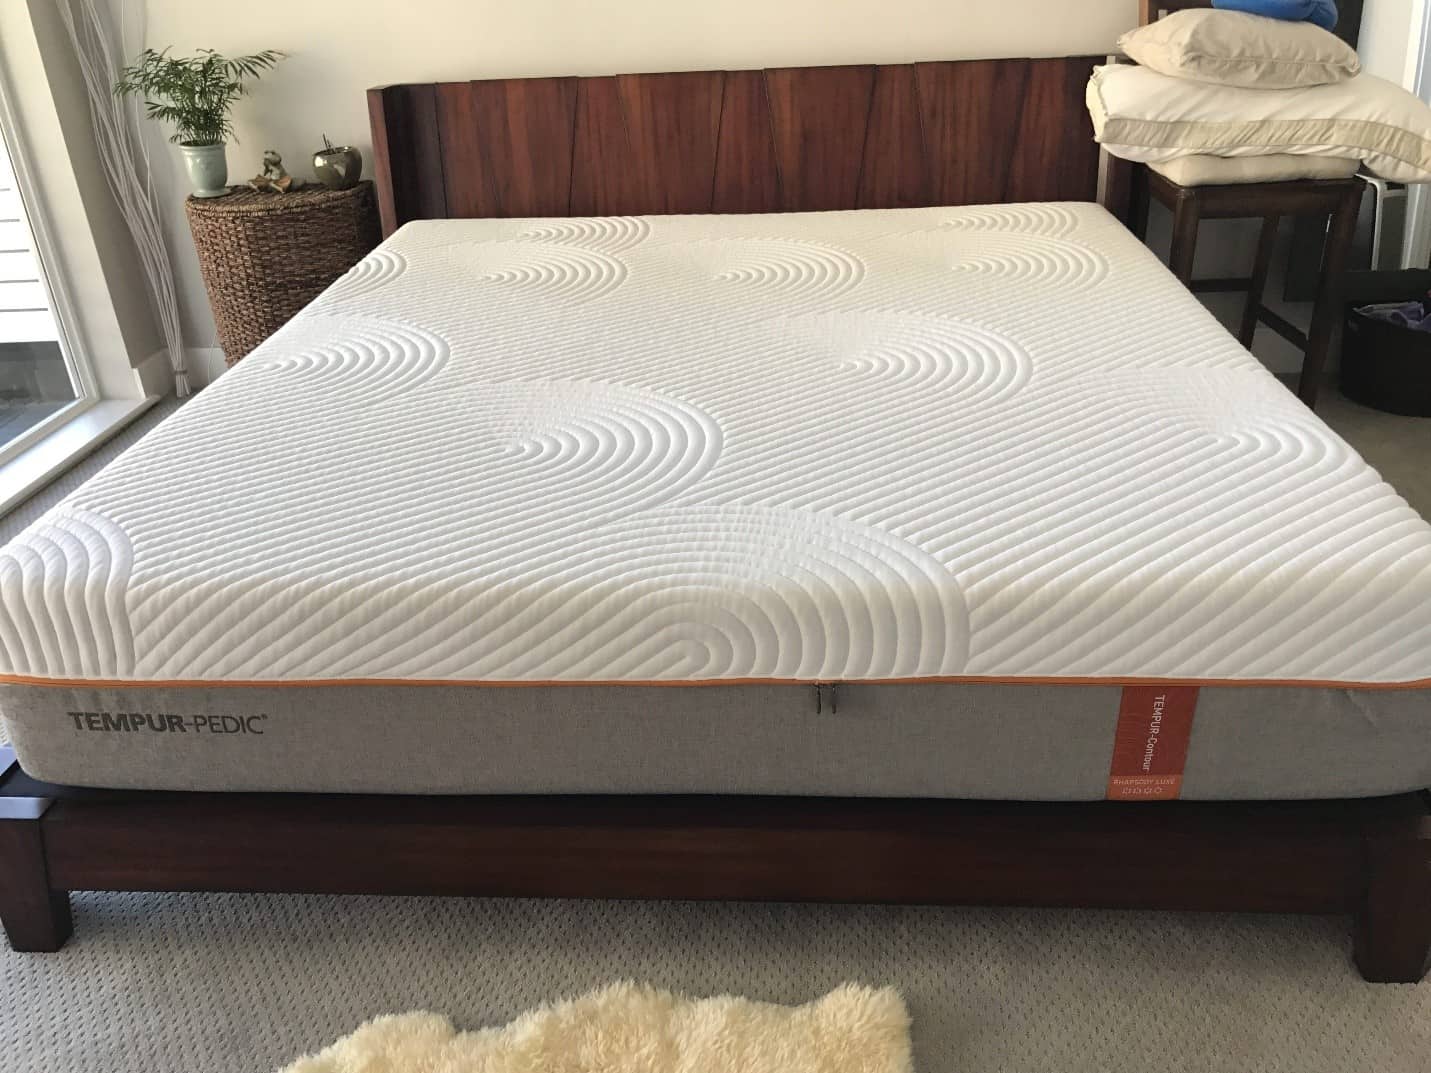 tempurpedic mattress on platform bed